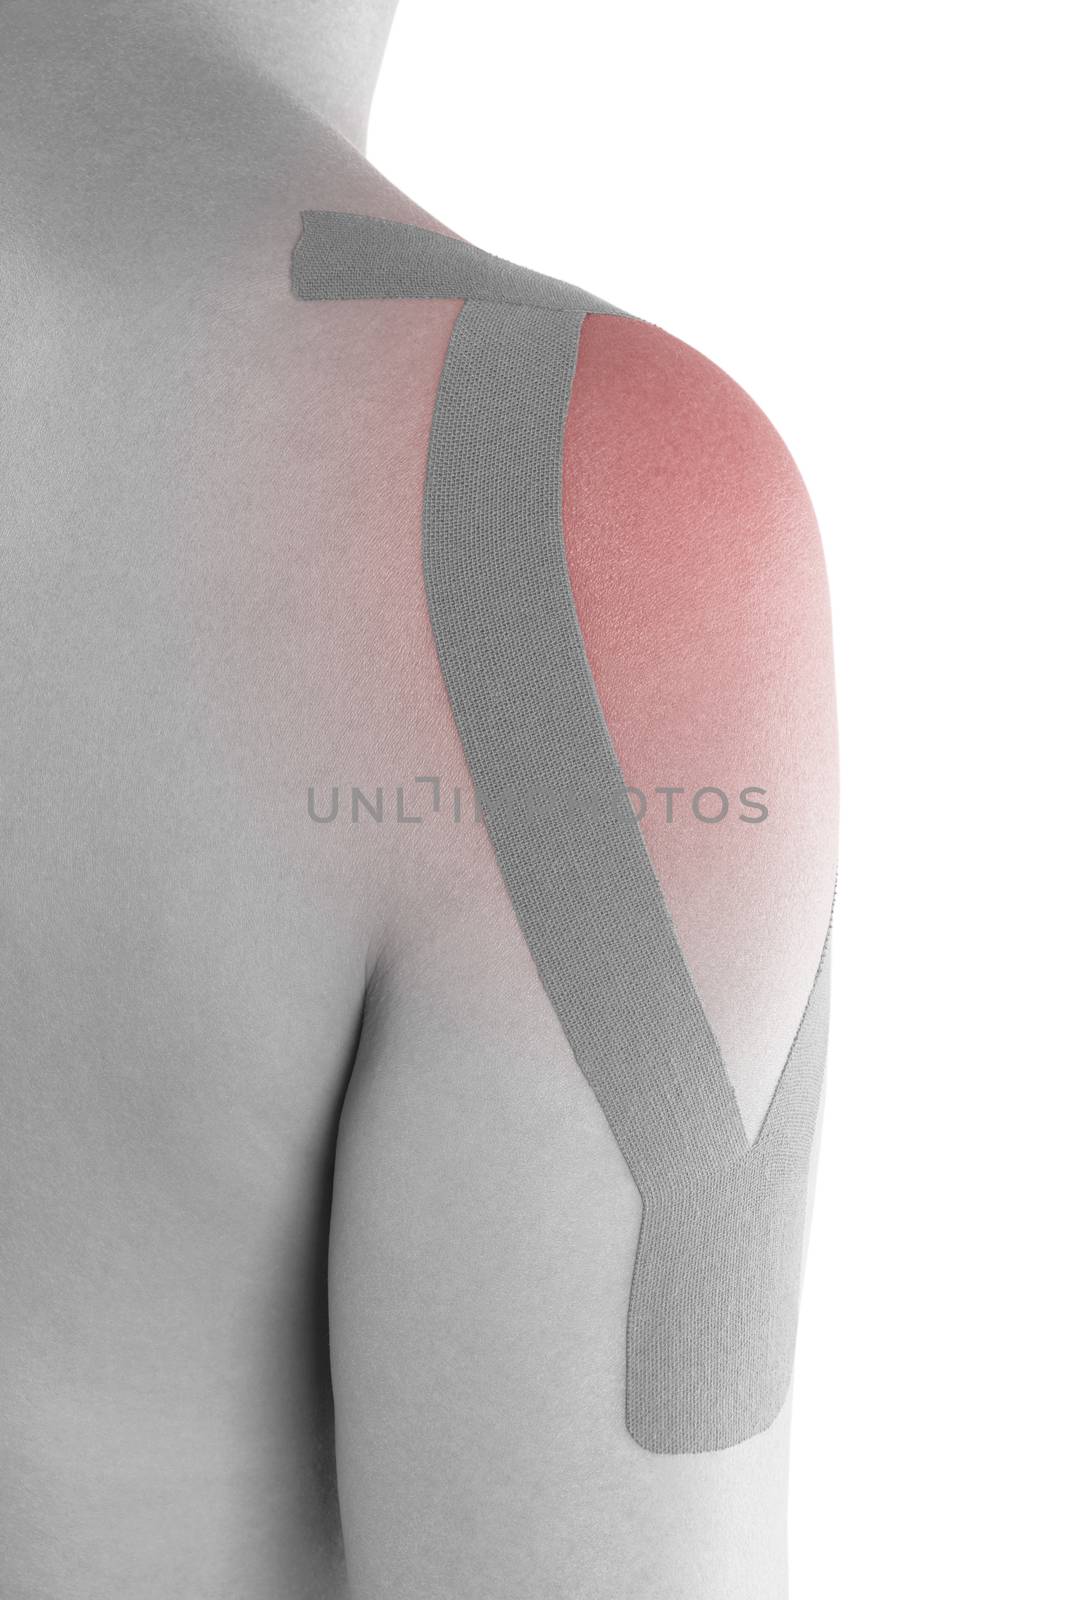 Kinesio tape on female shoulder by eskymaks